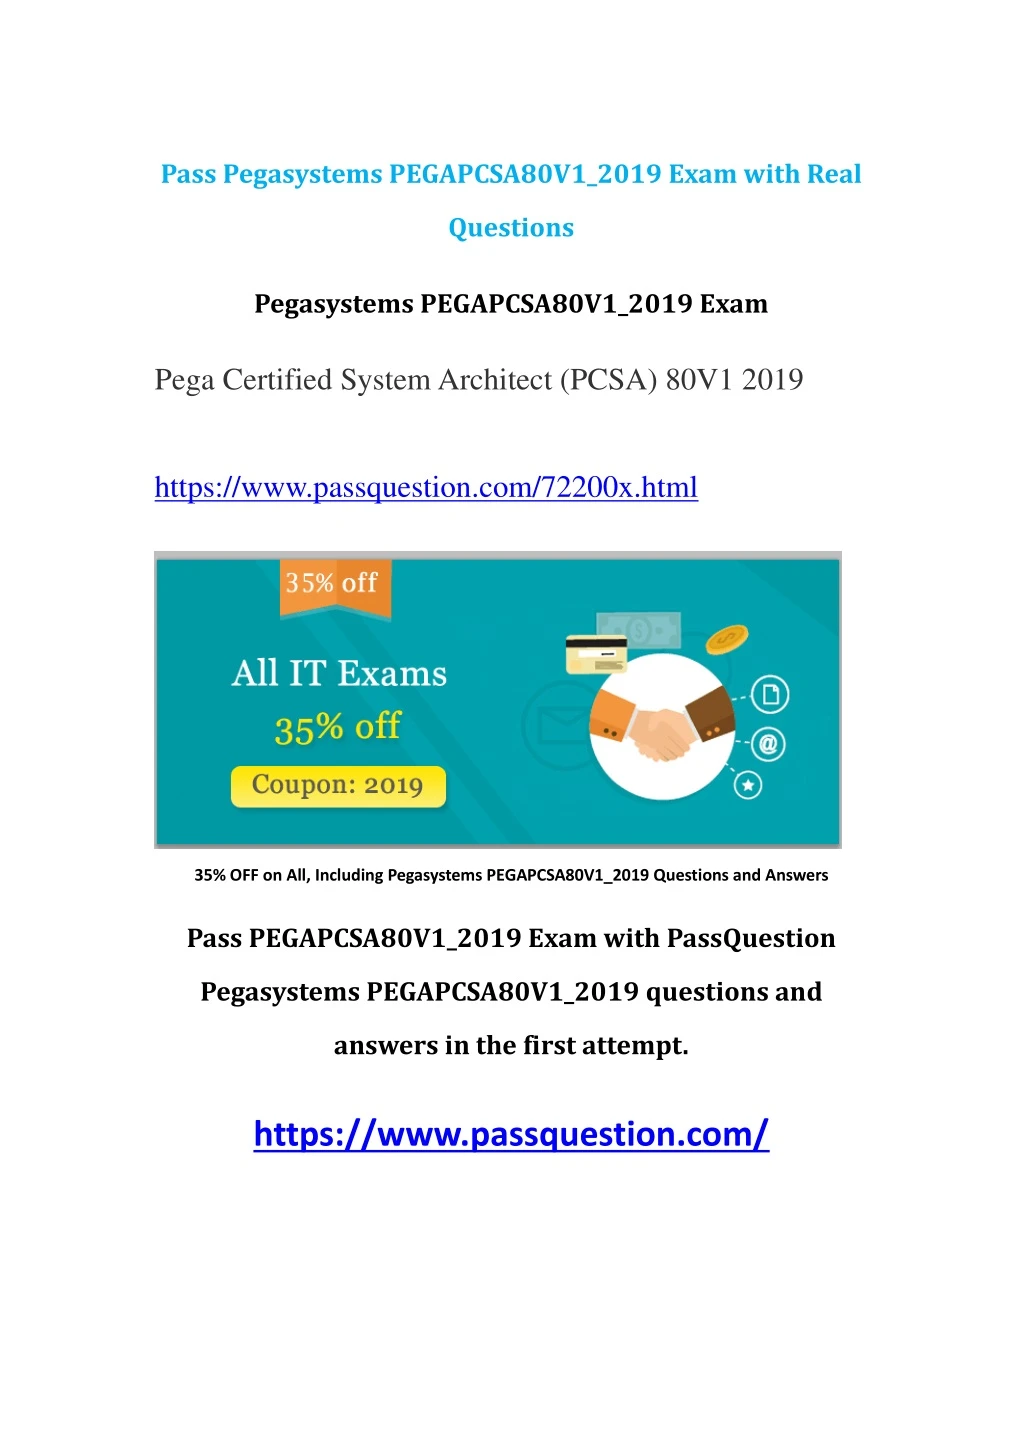 pass pegasystems pegapcsa80v1 2019 exam with real